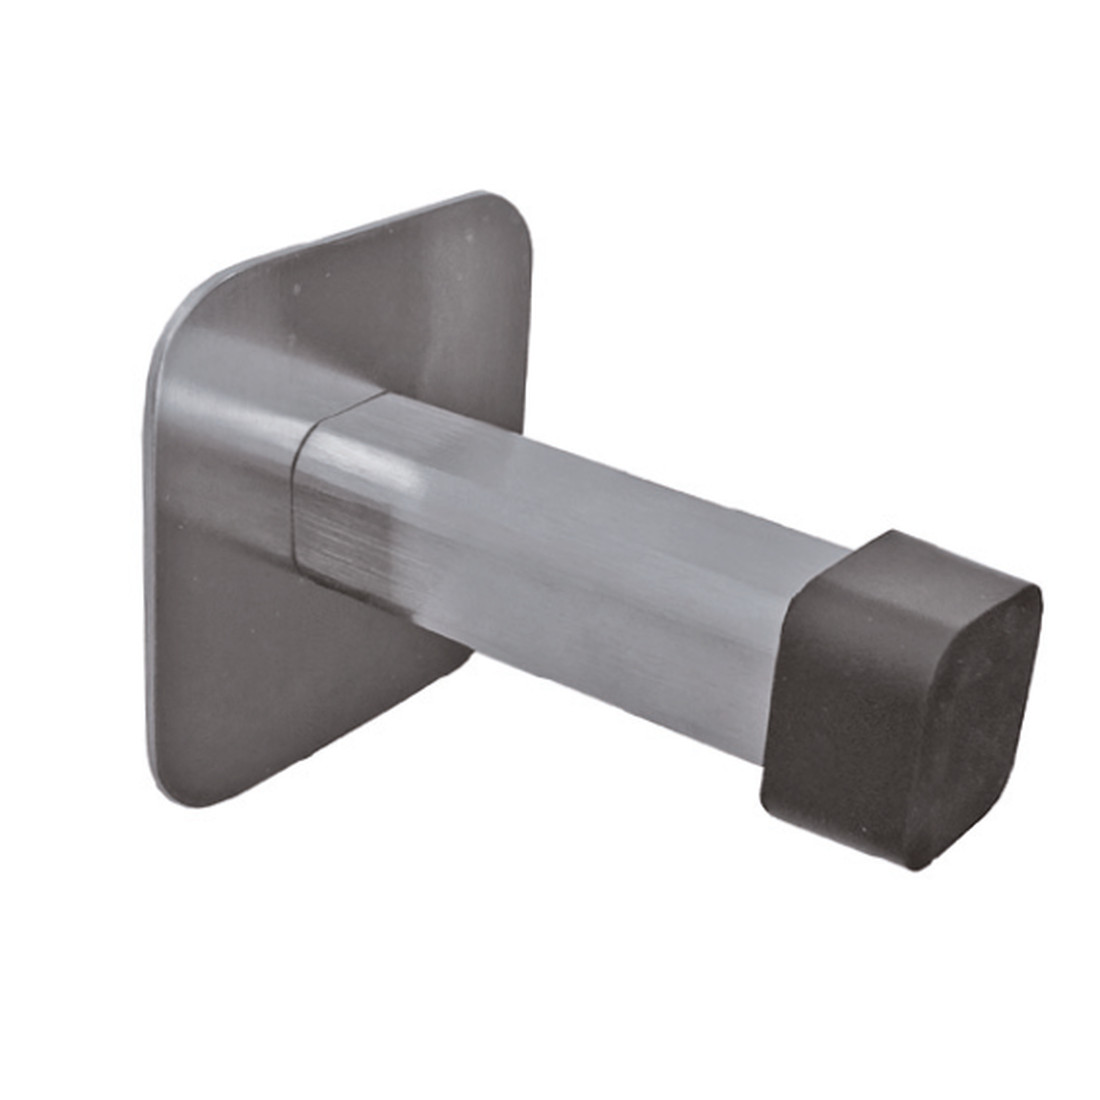 Door stopper, angular, [/] 16/16mm, wall plate 40/40mm, theft hinder